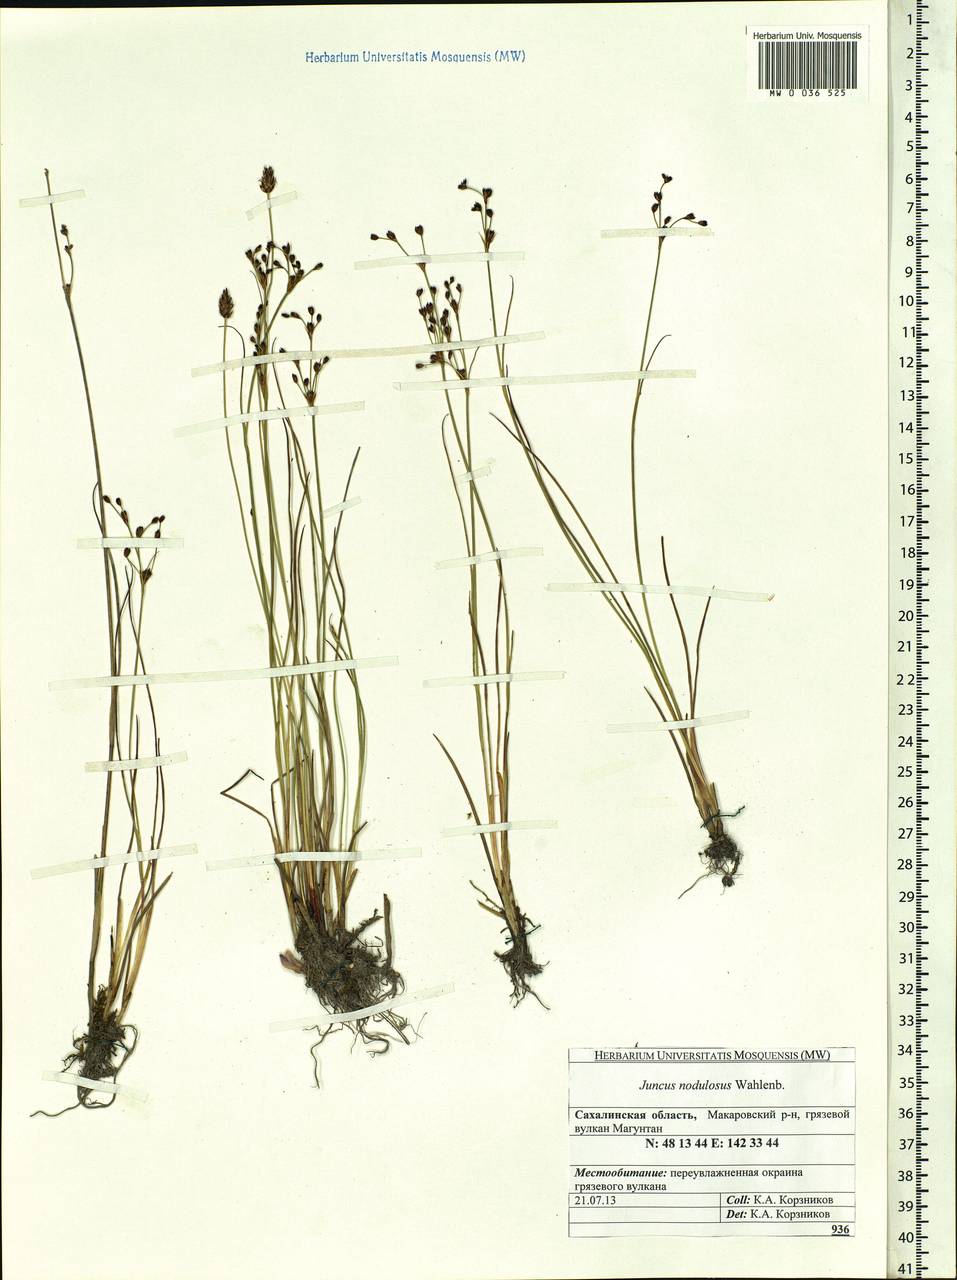 Juncus alpinoarticulatus subsp. rariflorus (Hartm.) Holub, Siberia, Russian Far East (S6) (Russia)